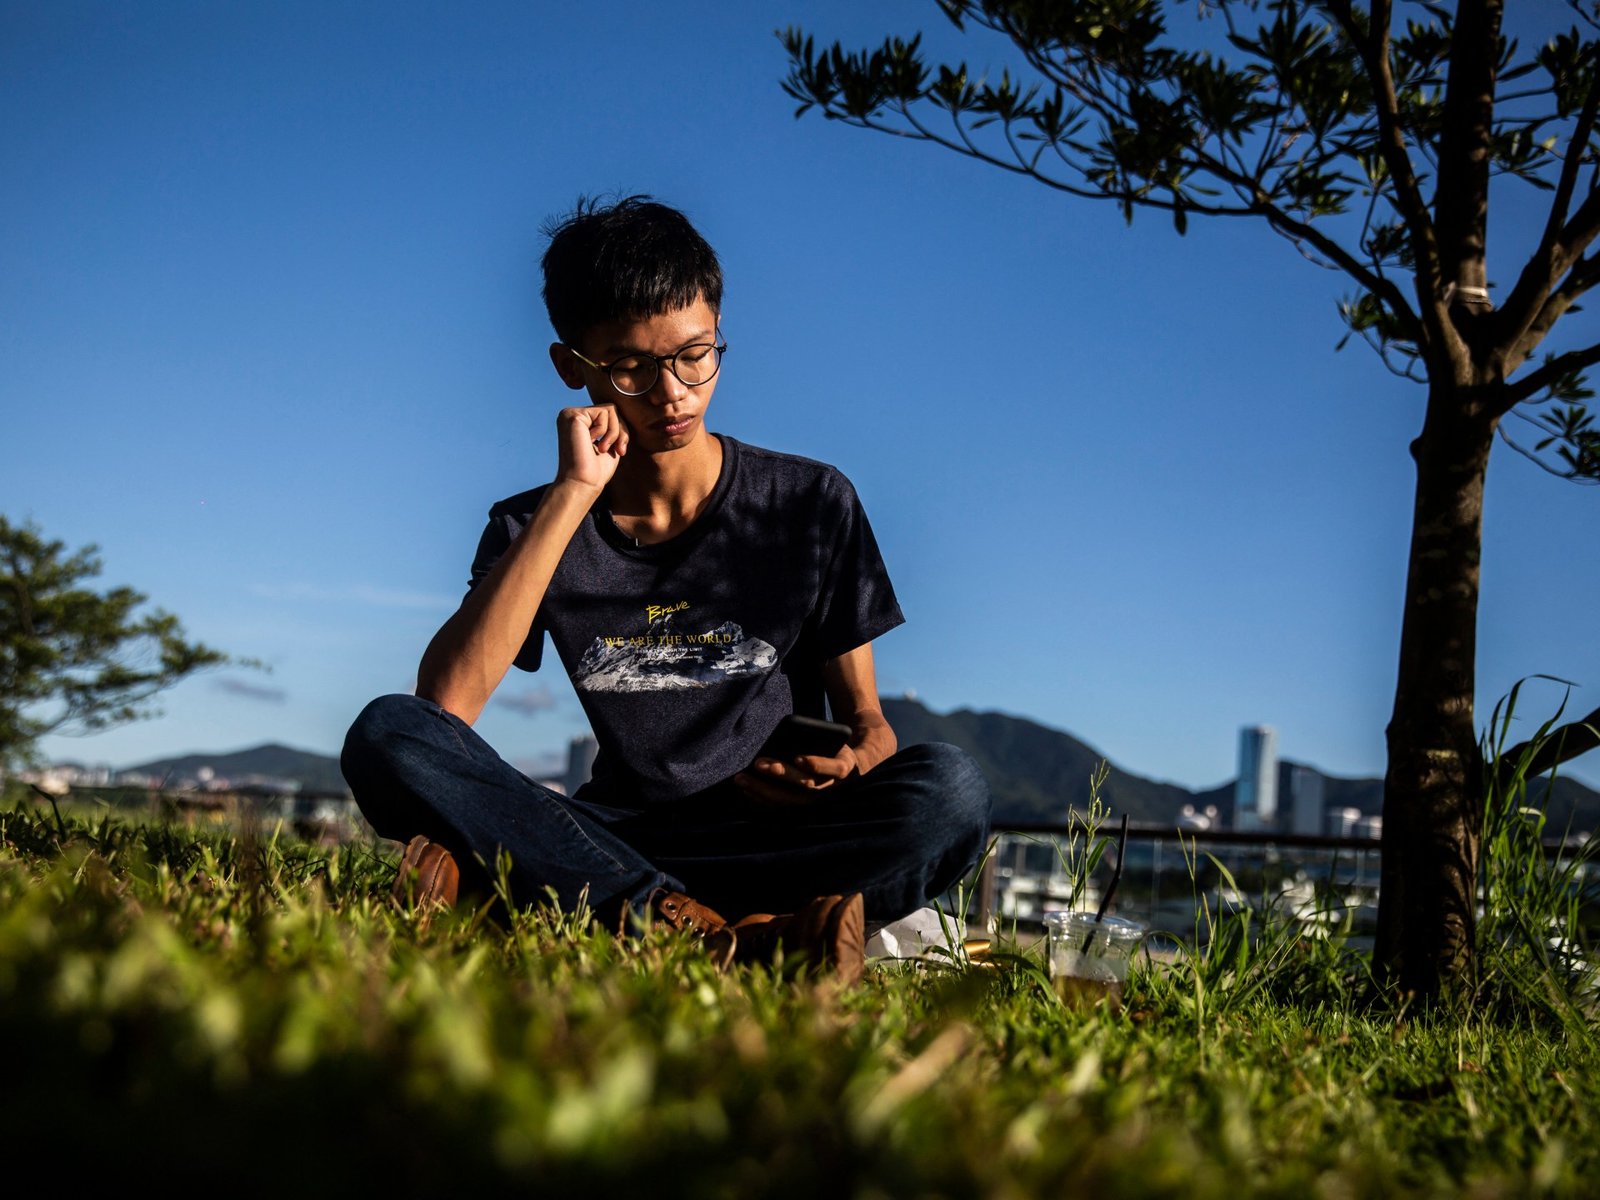 ‘Filled with fear’: Former Hong Kong student leader seeks UK asylum | Politics News